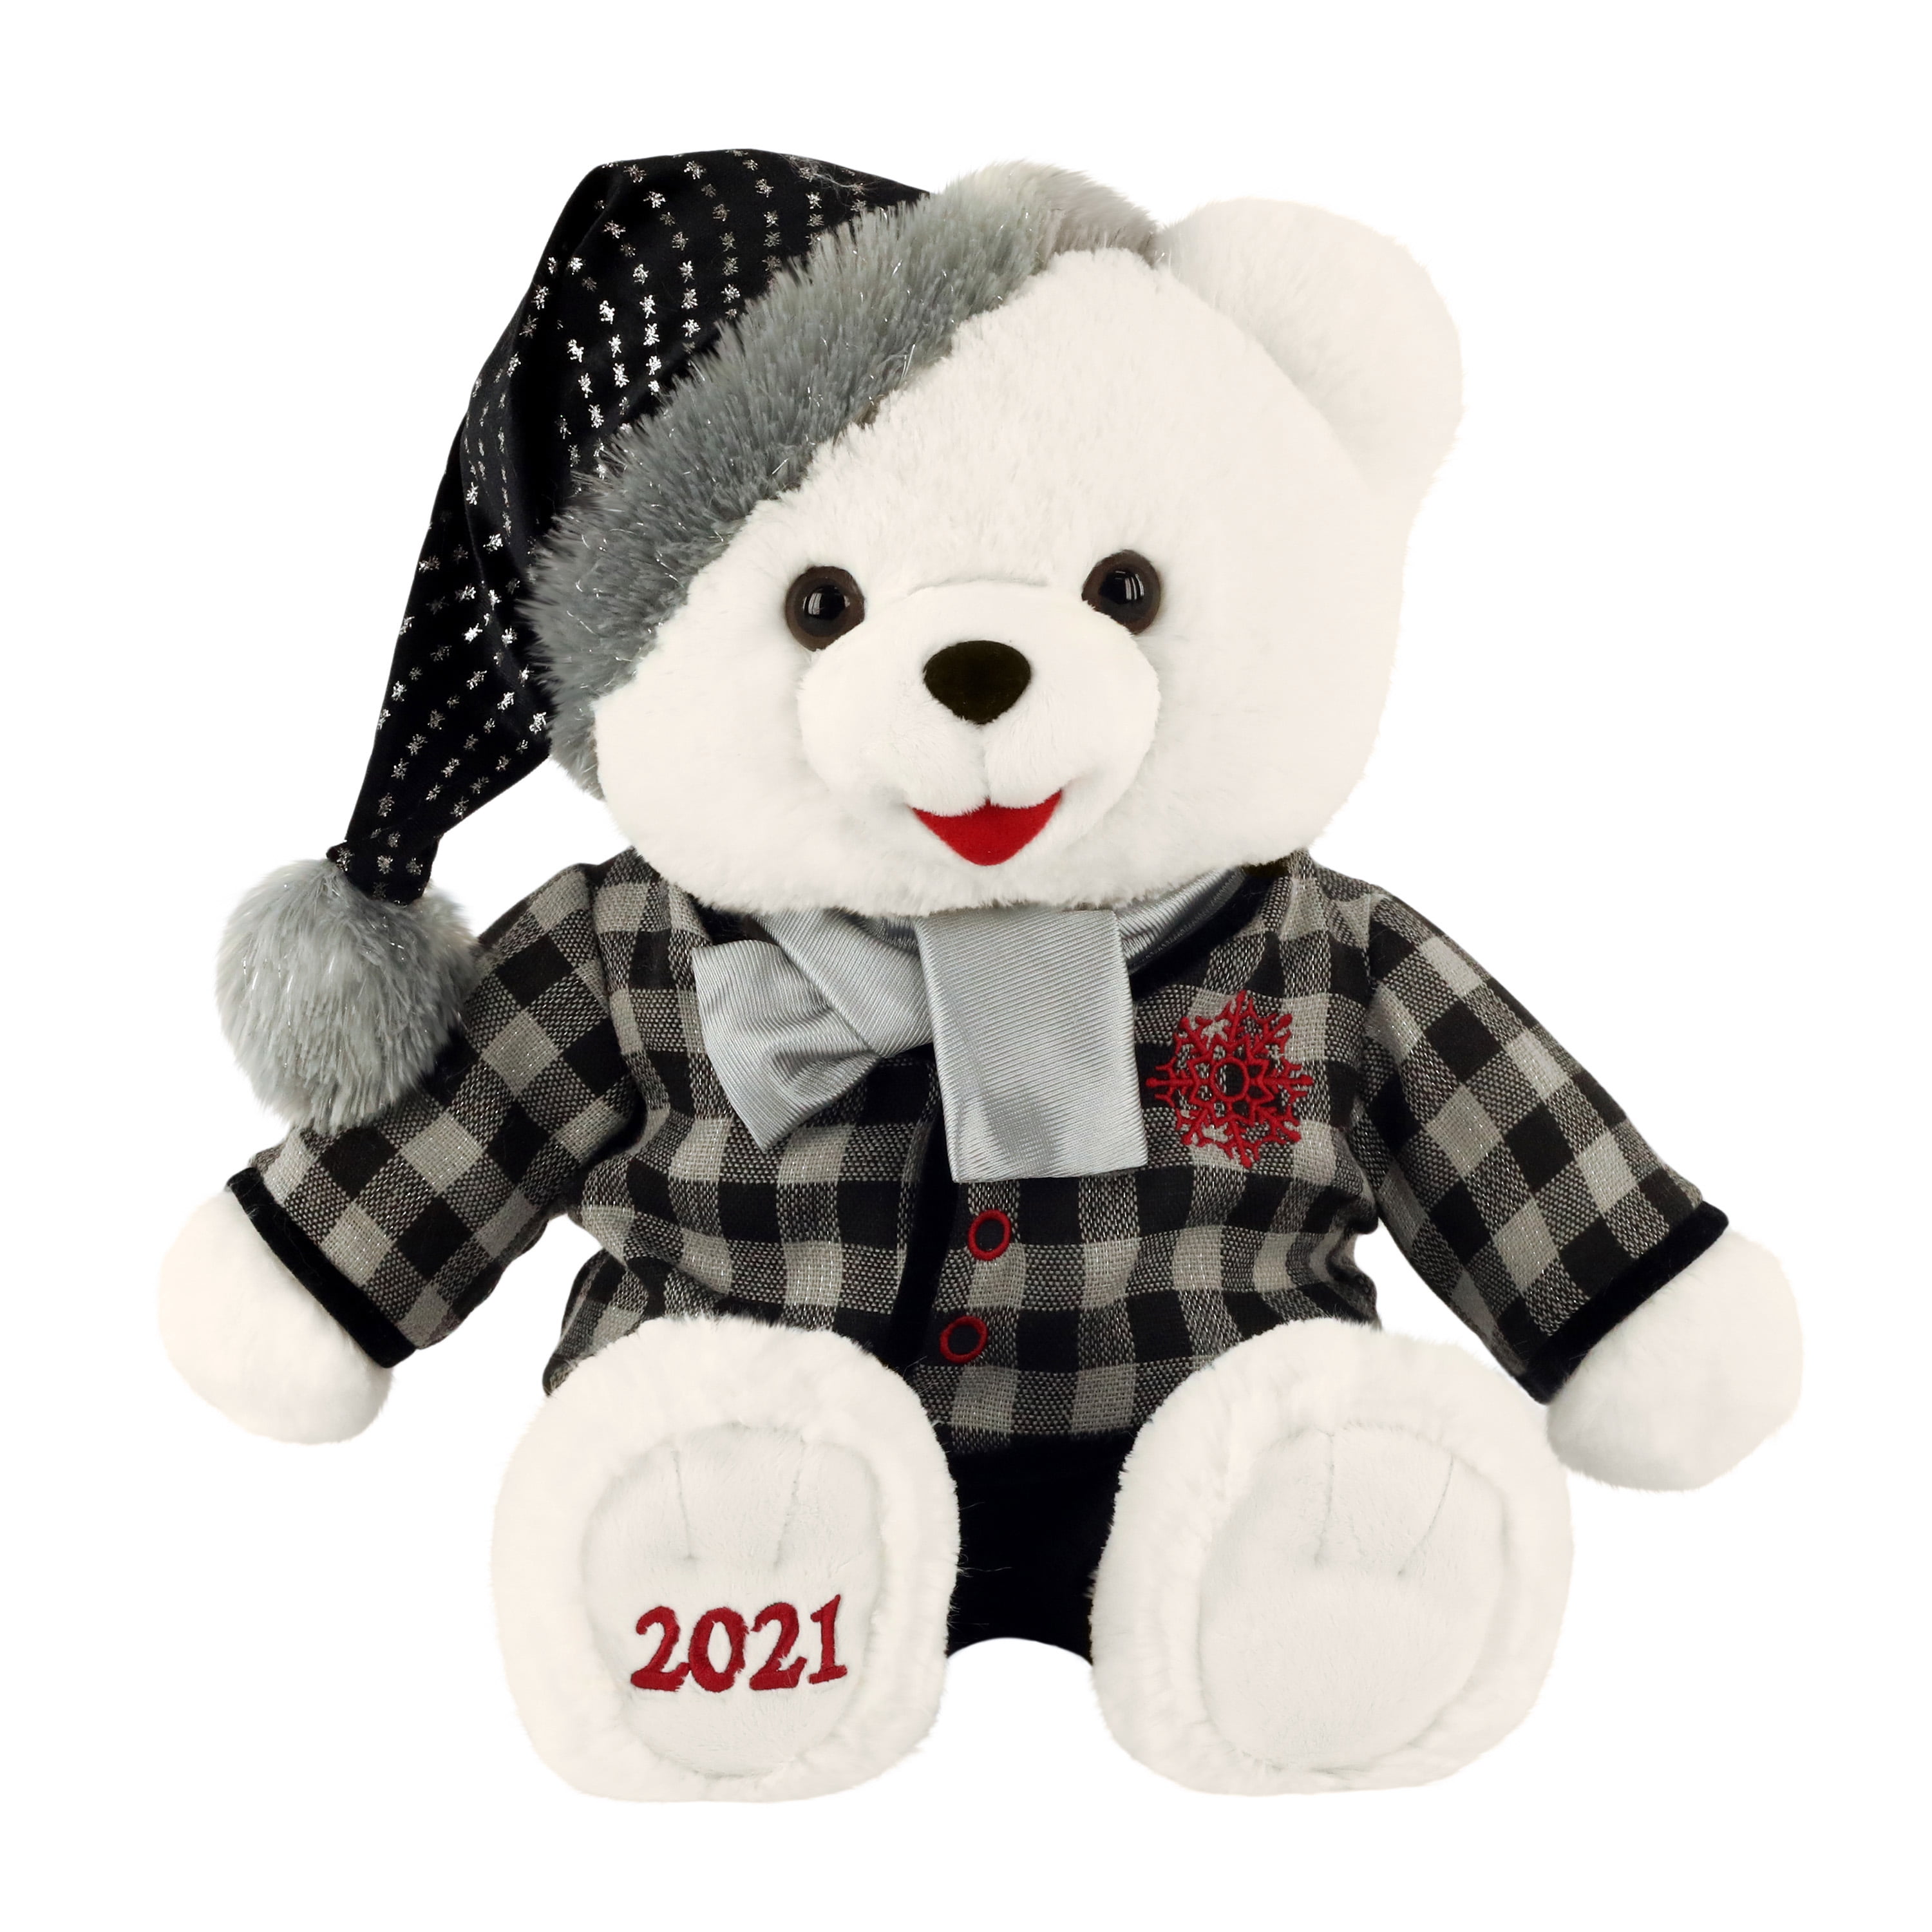 2020 WalMART CHRISTMAS Snowflake TEDDY BEAR White boy 20" Purple Outfit New W/T